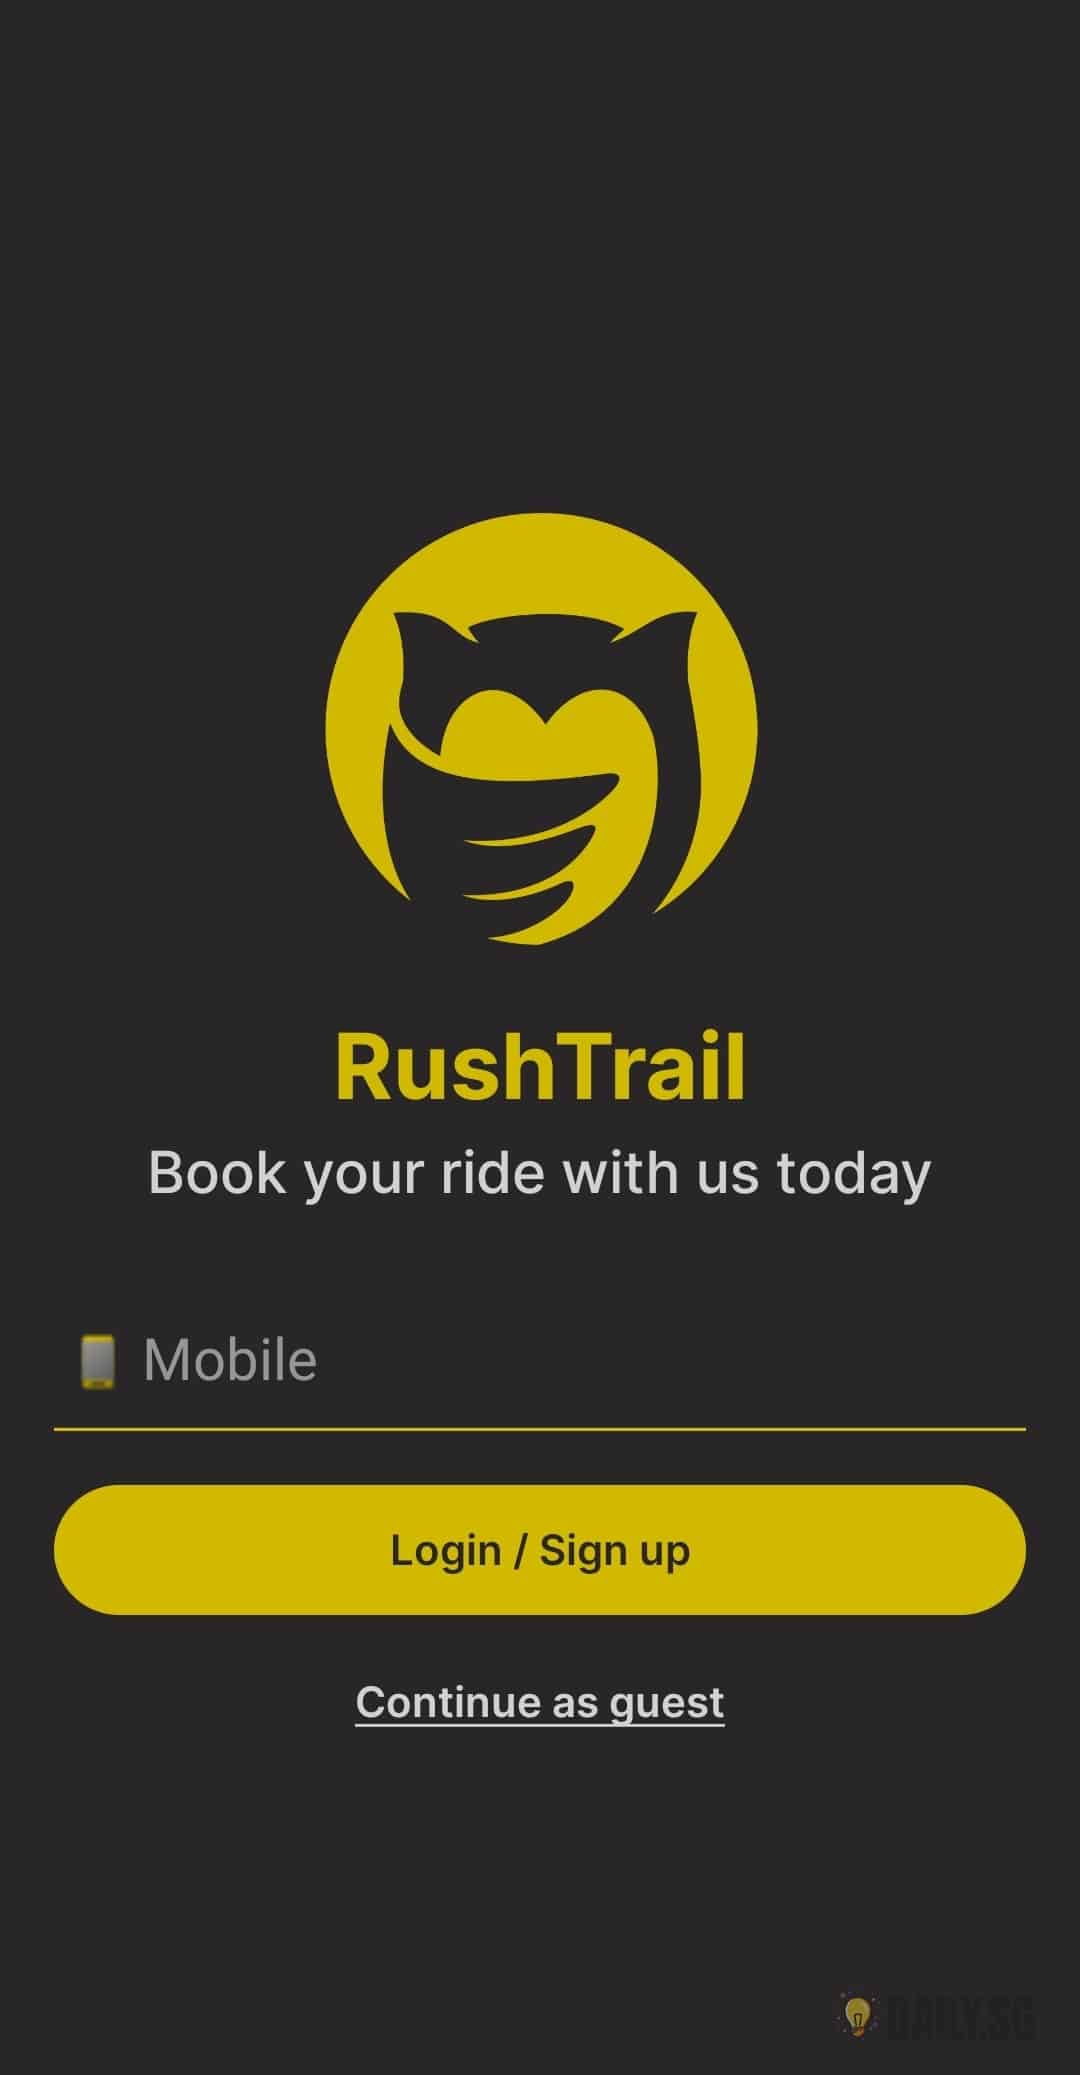 RushTrail - 第 1 步注册